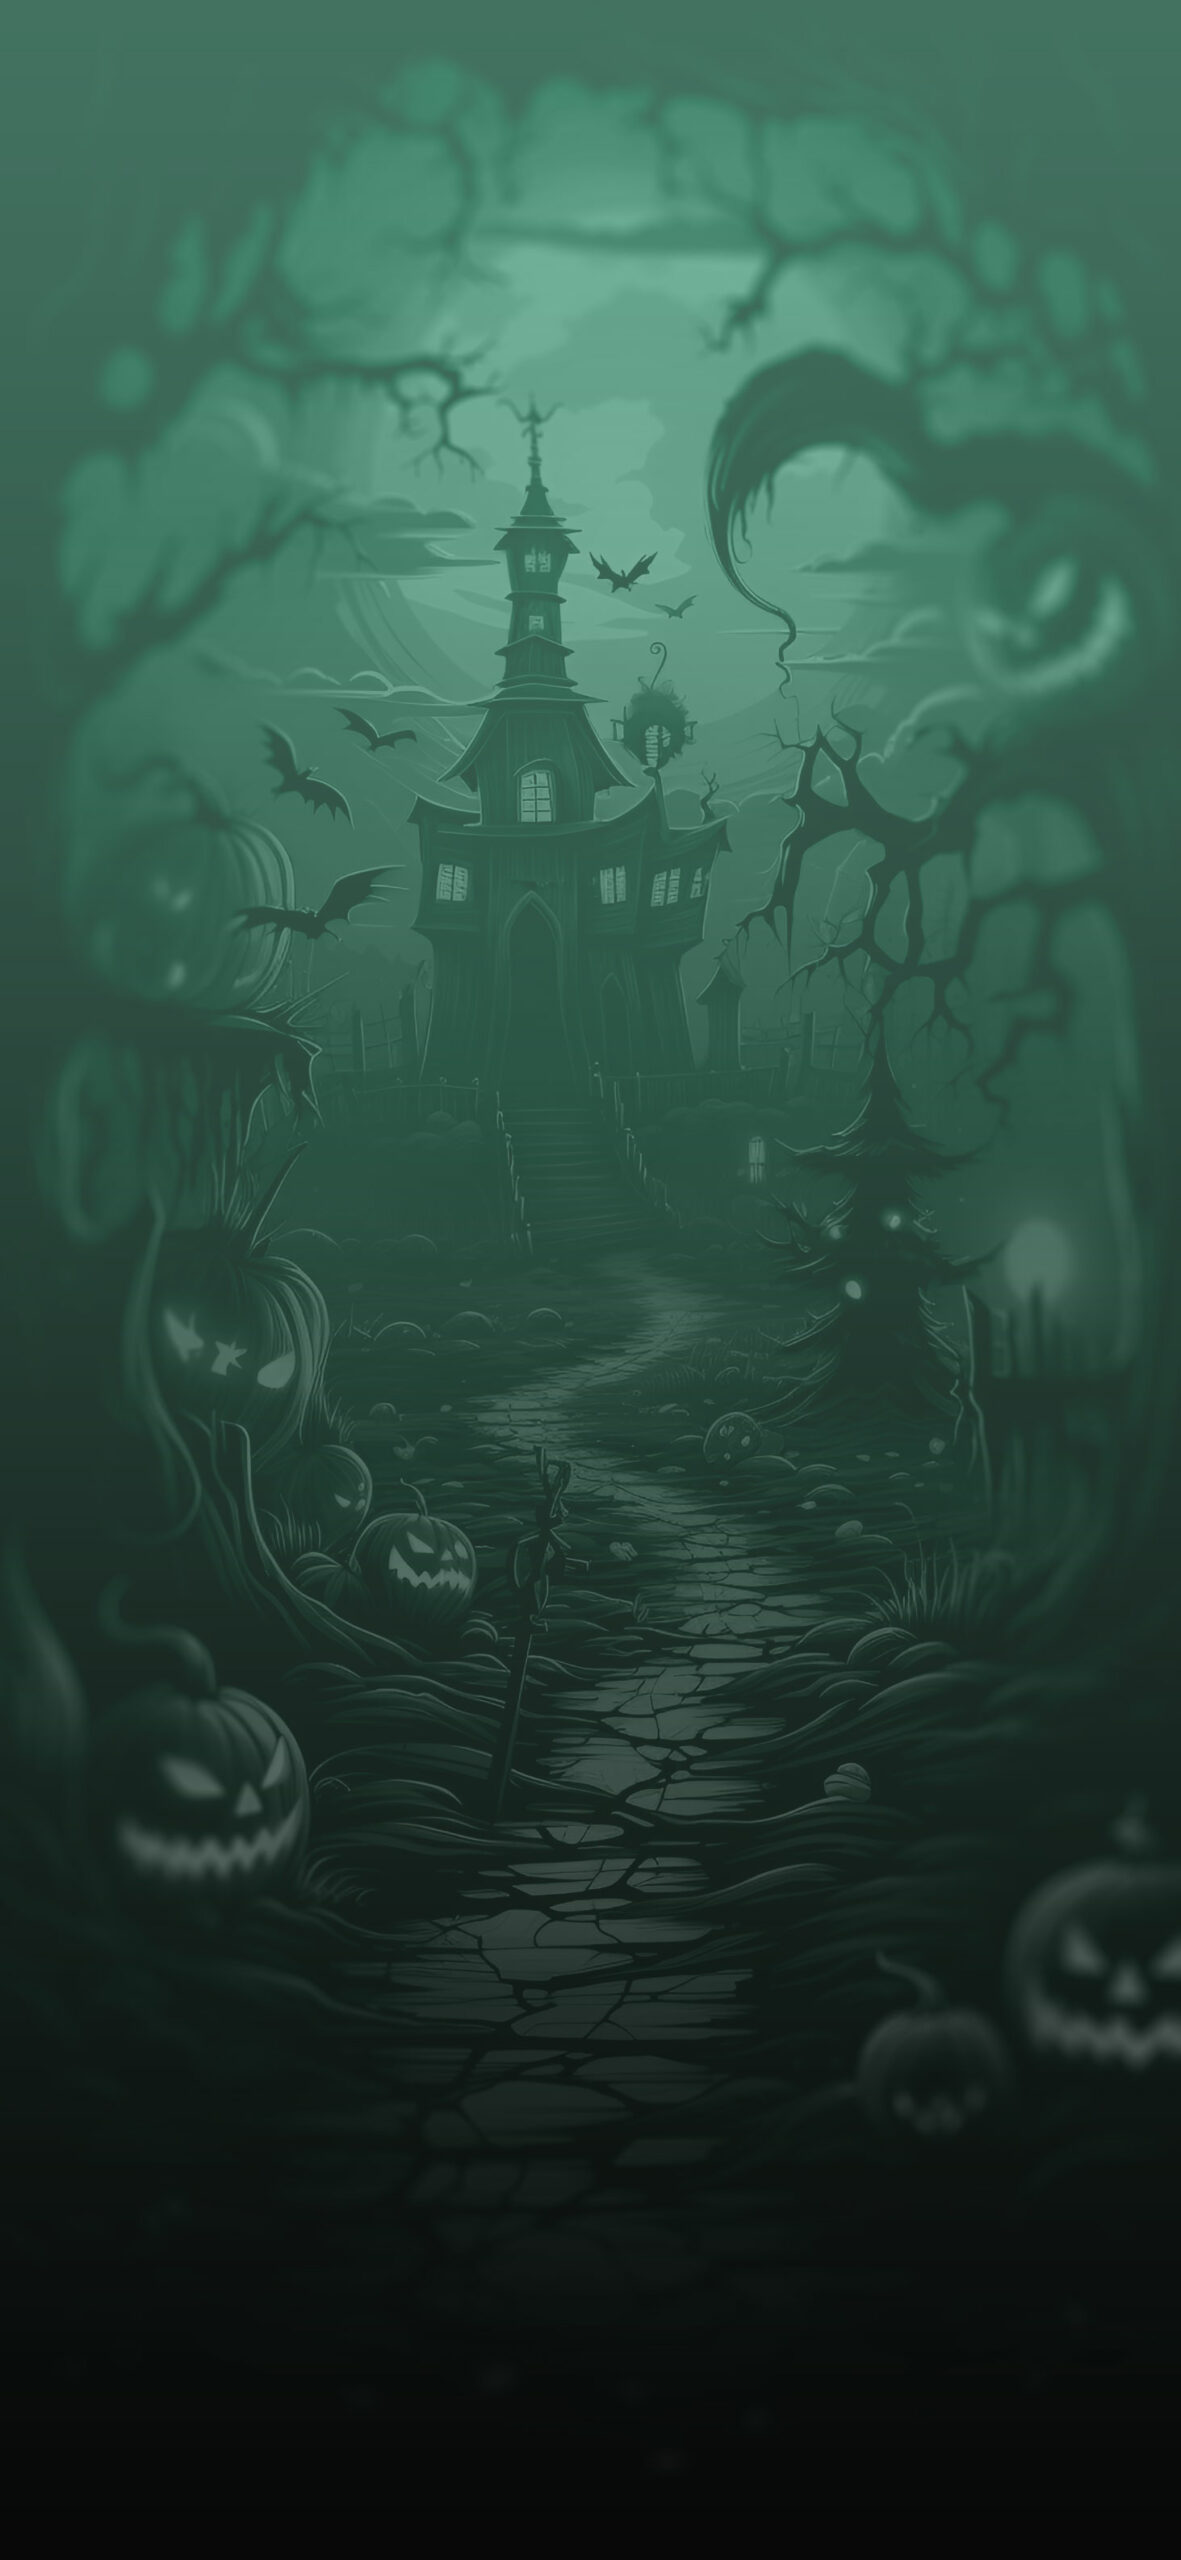 Spooky halloween vector style art wallpaper Halloween scary ae